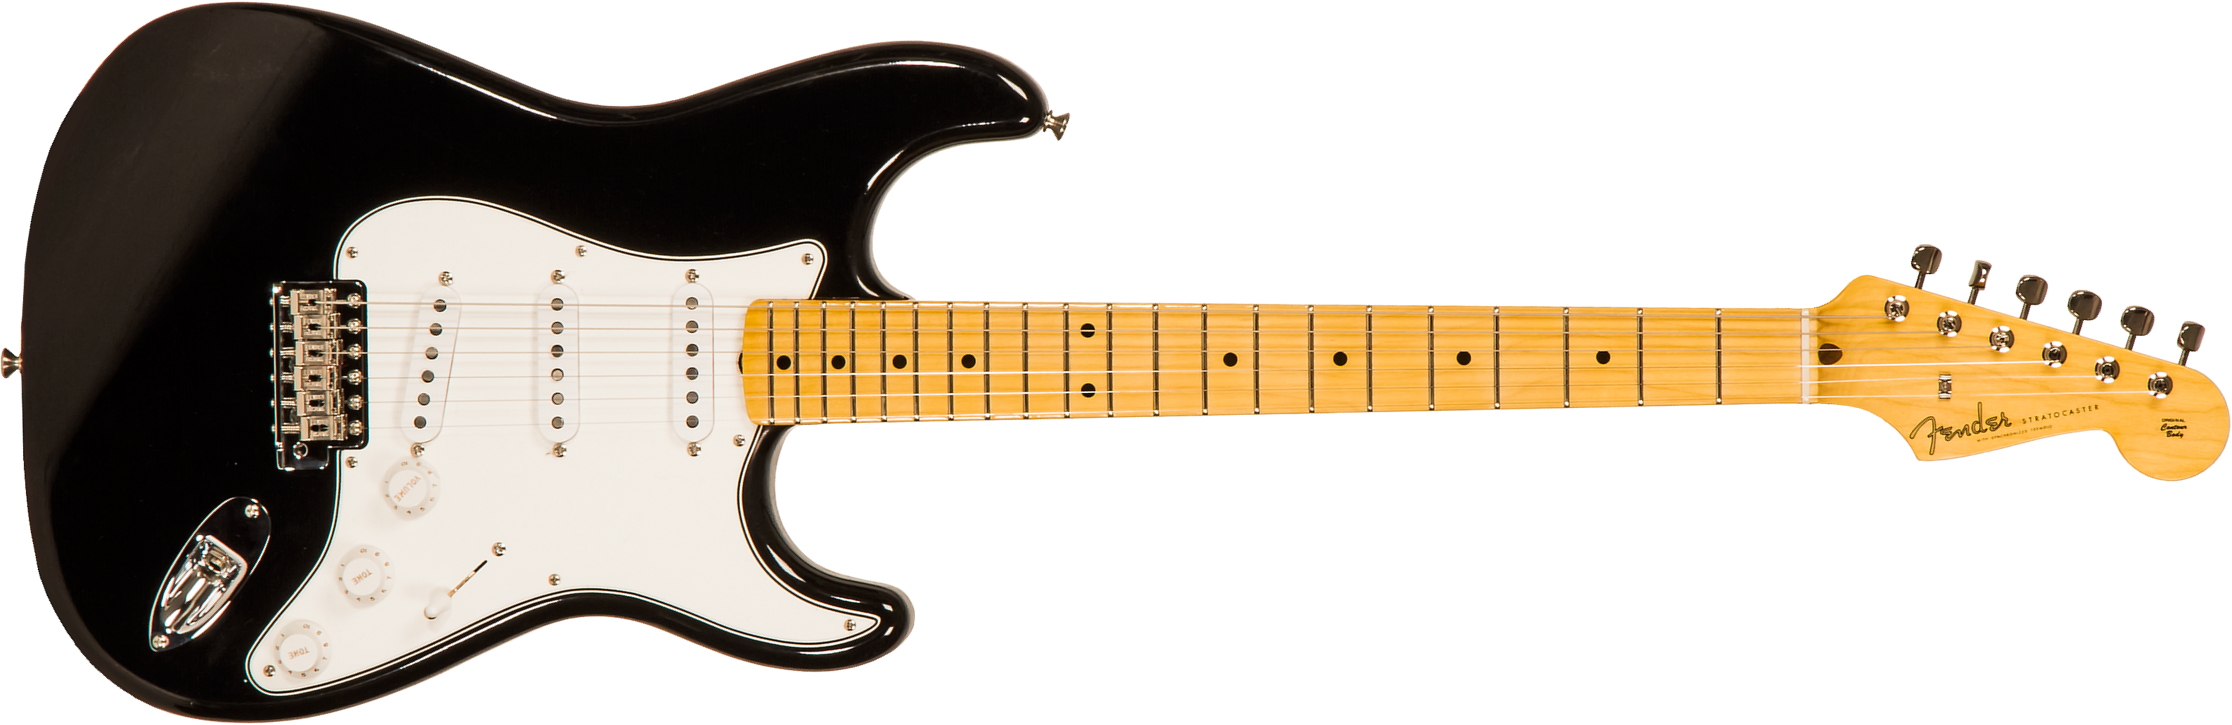 Fender Custom Shop Strat 1958 3s Trem Mn #r113828 - Closet Classic Black - Elektrische gitaar in Str-vorm - Main picture